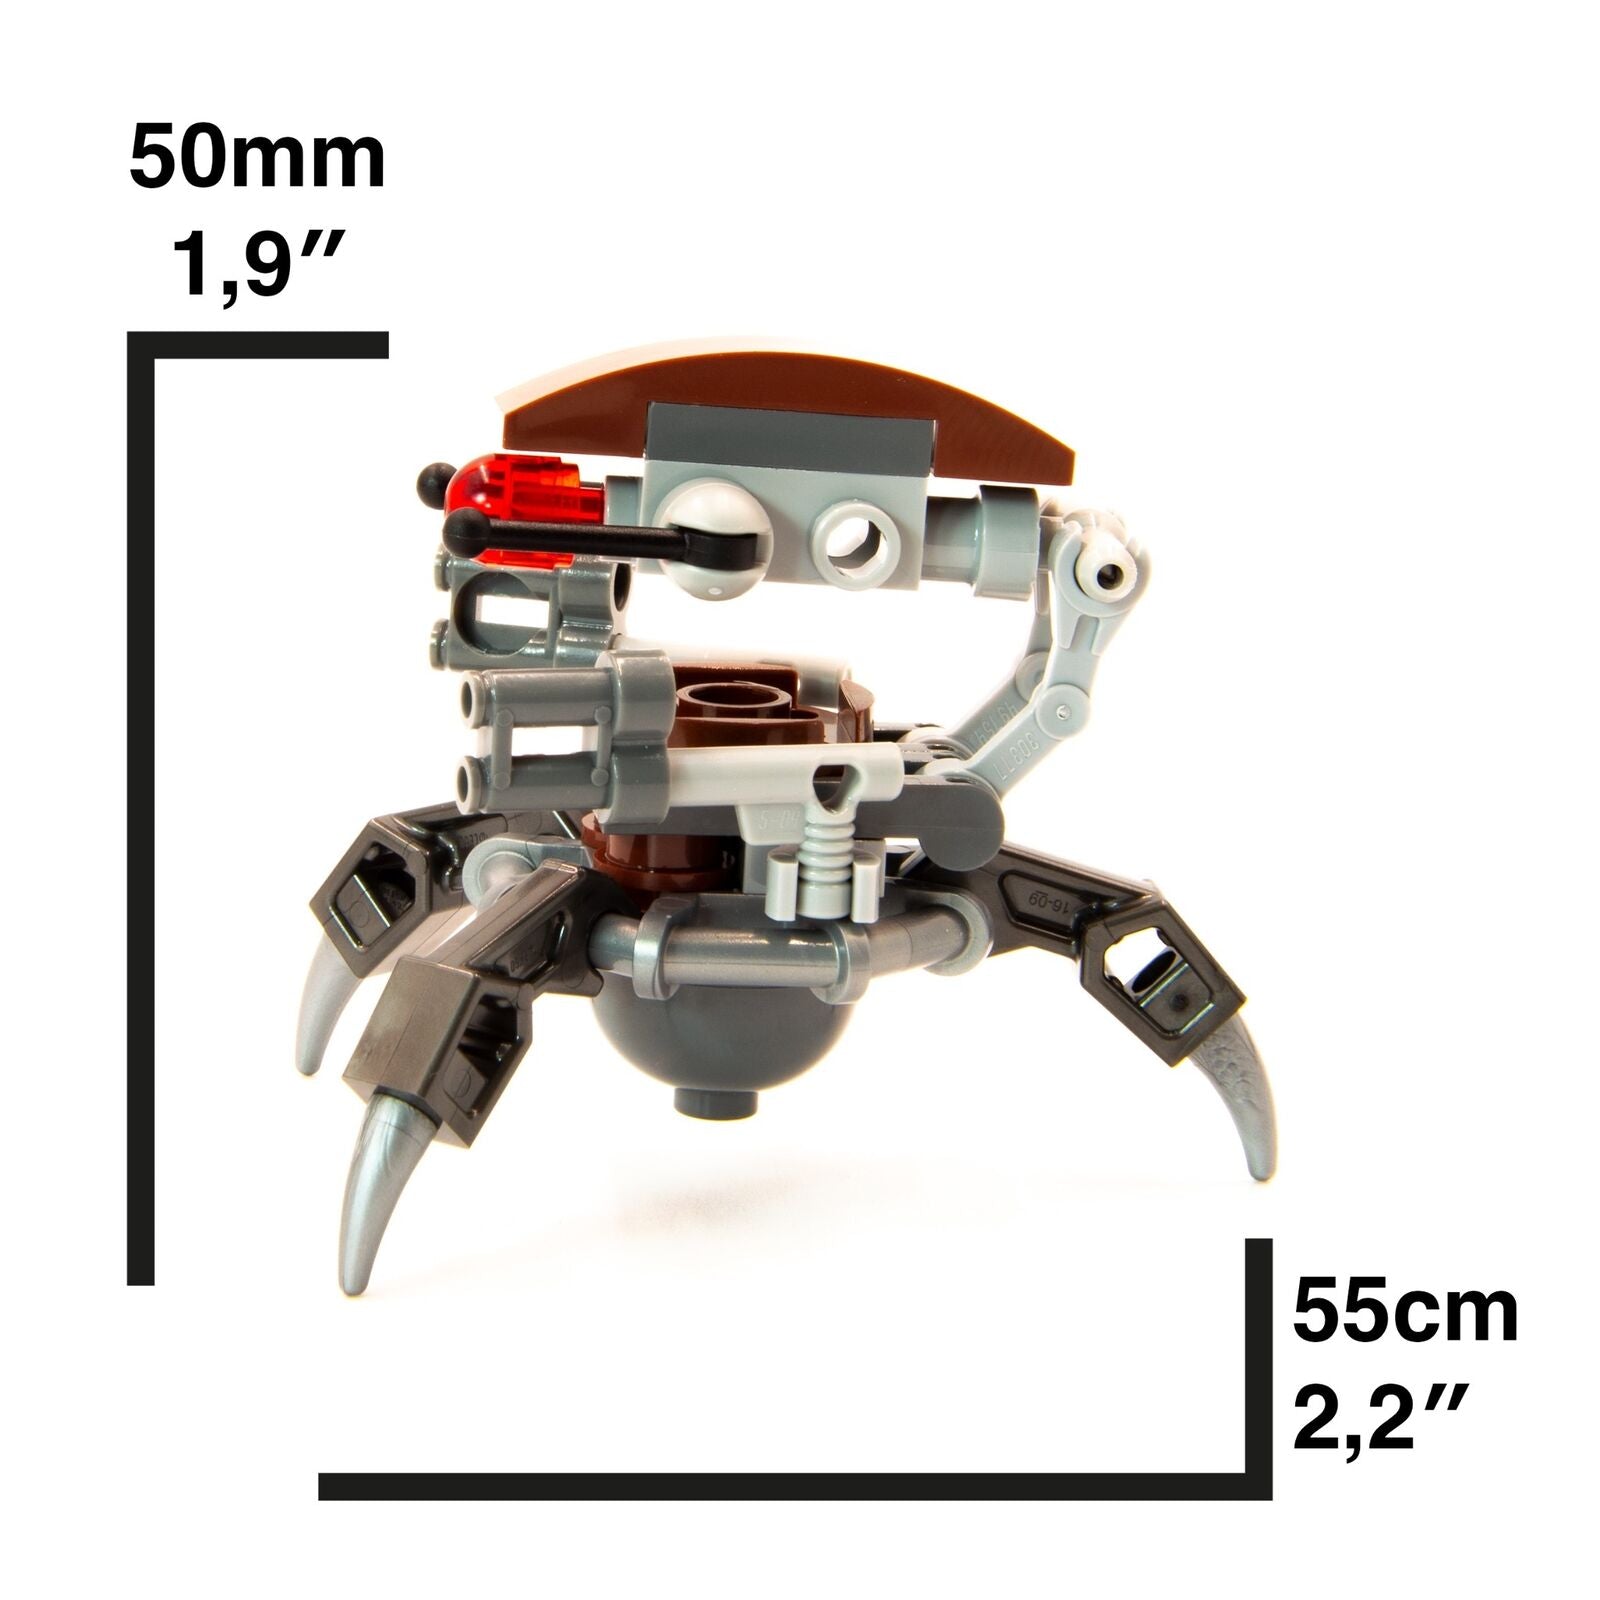 LEGO Star Wars Minifigure - Droideka (Gray Arms)